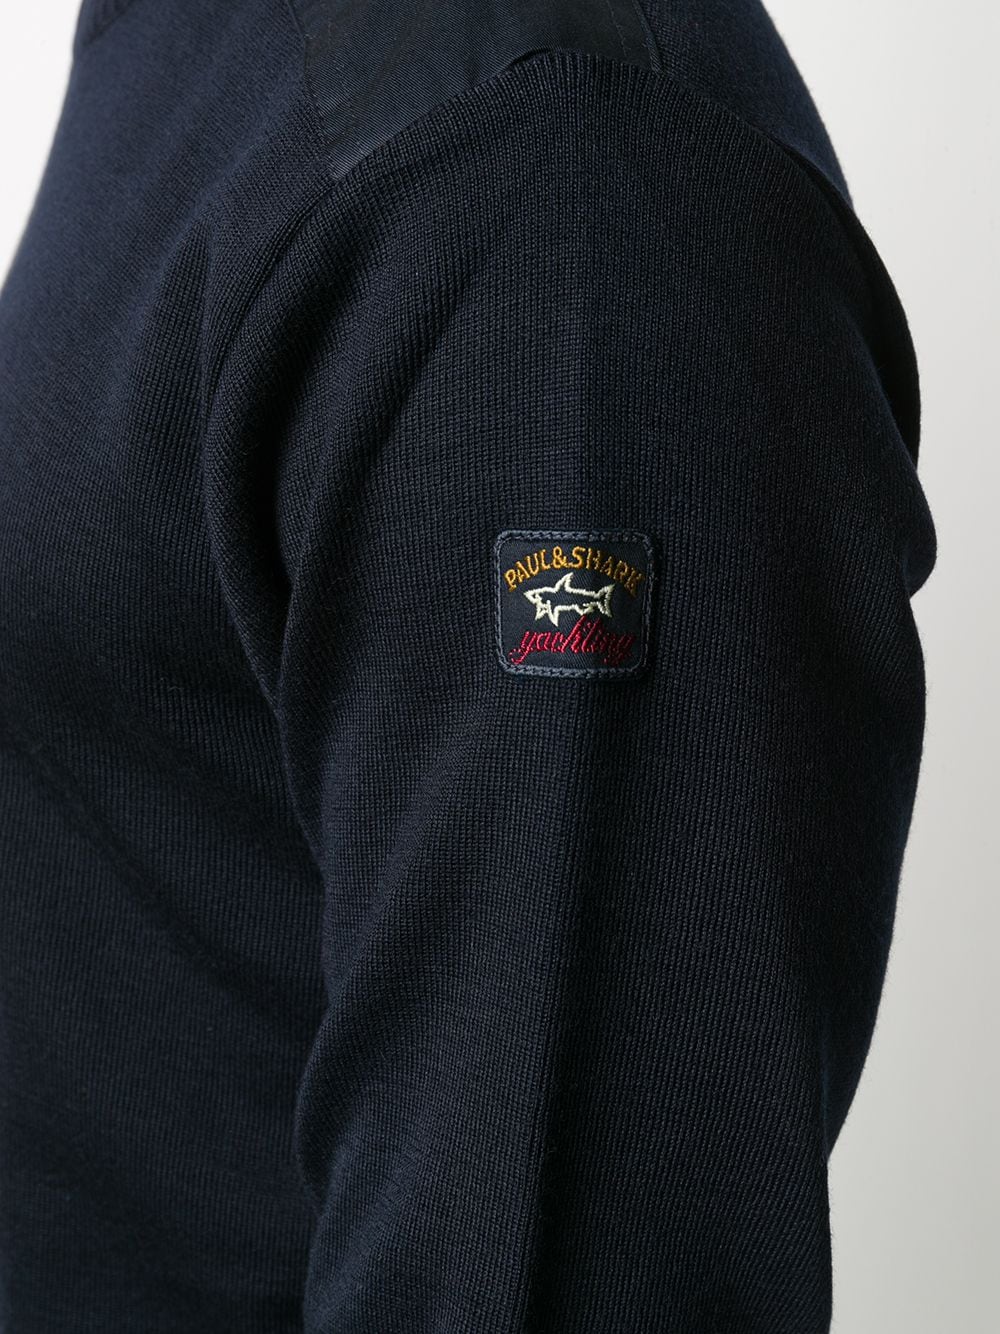 фото Paul & shark свитер с нашивкой-логотипом